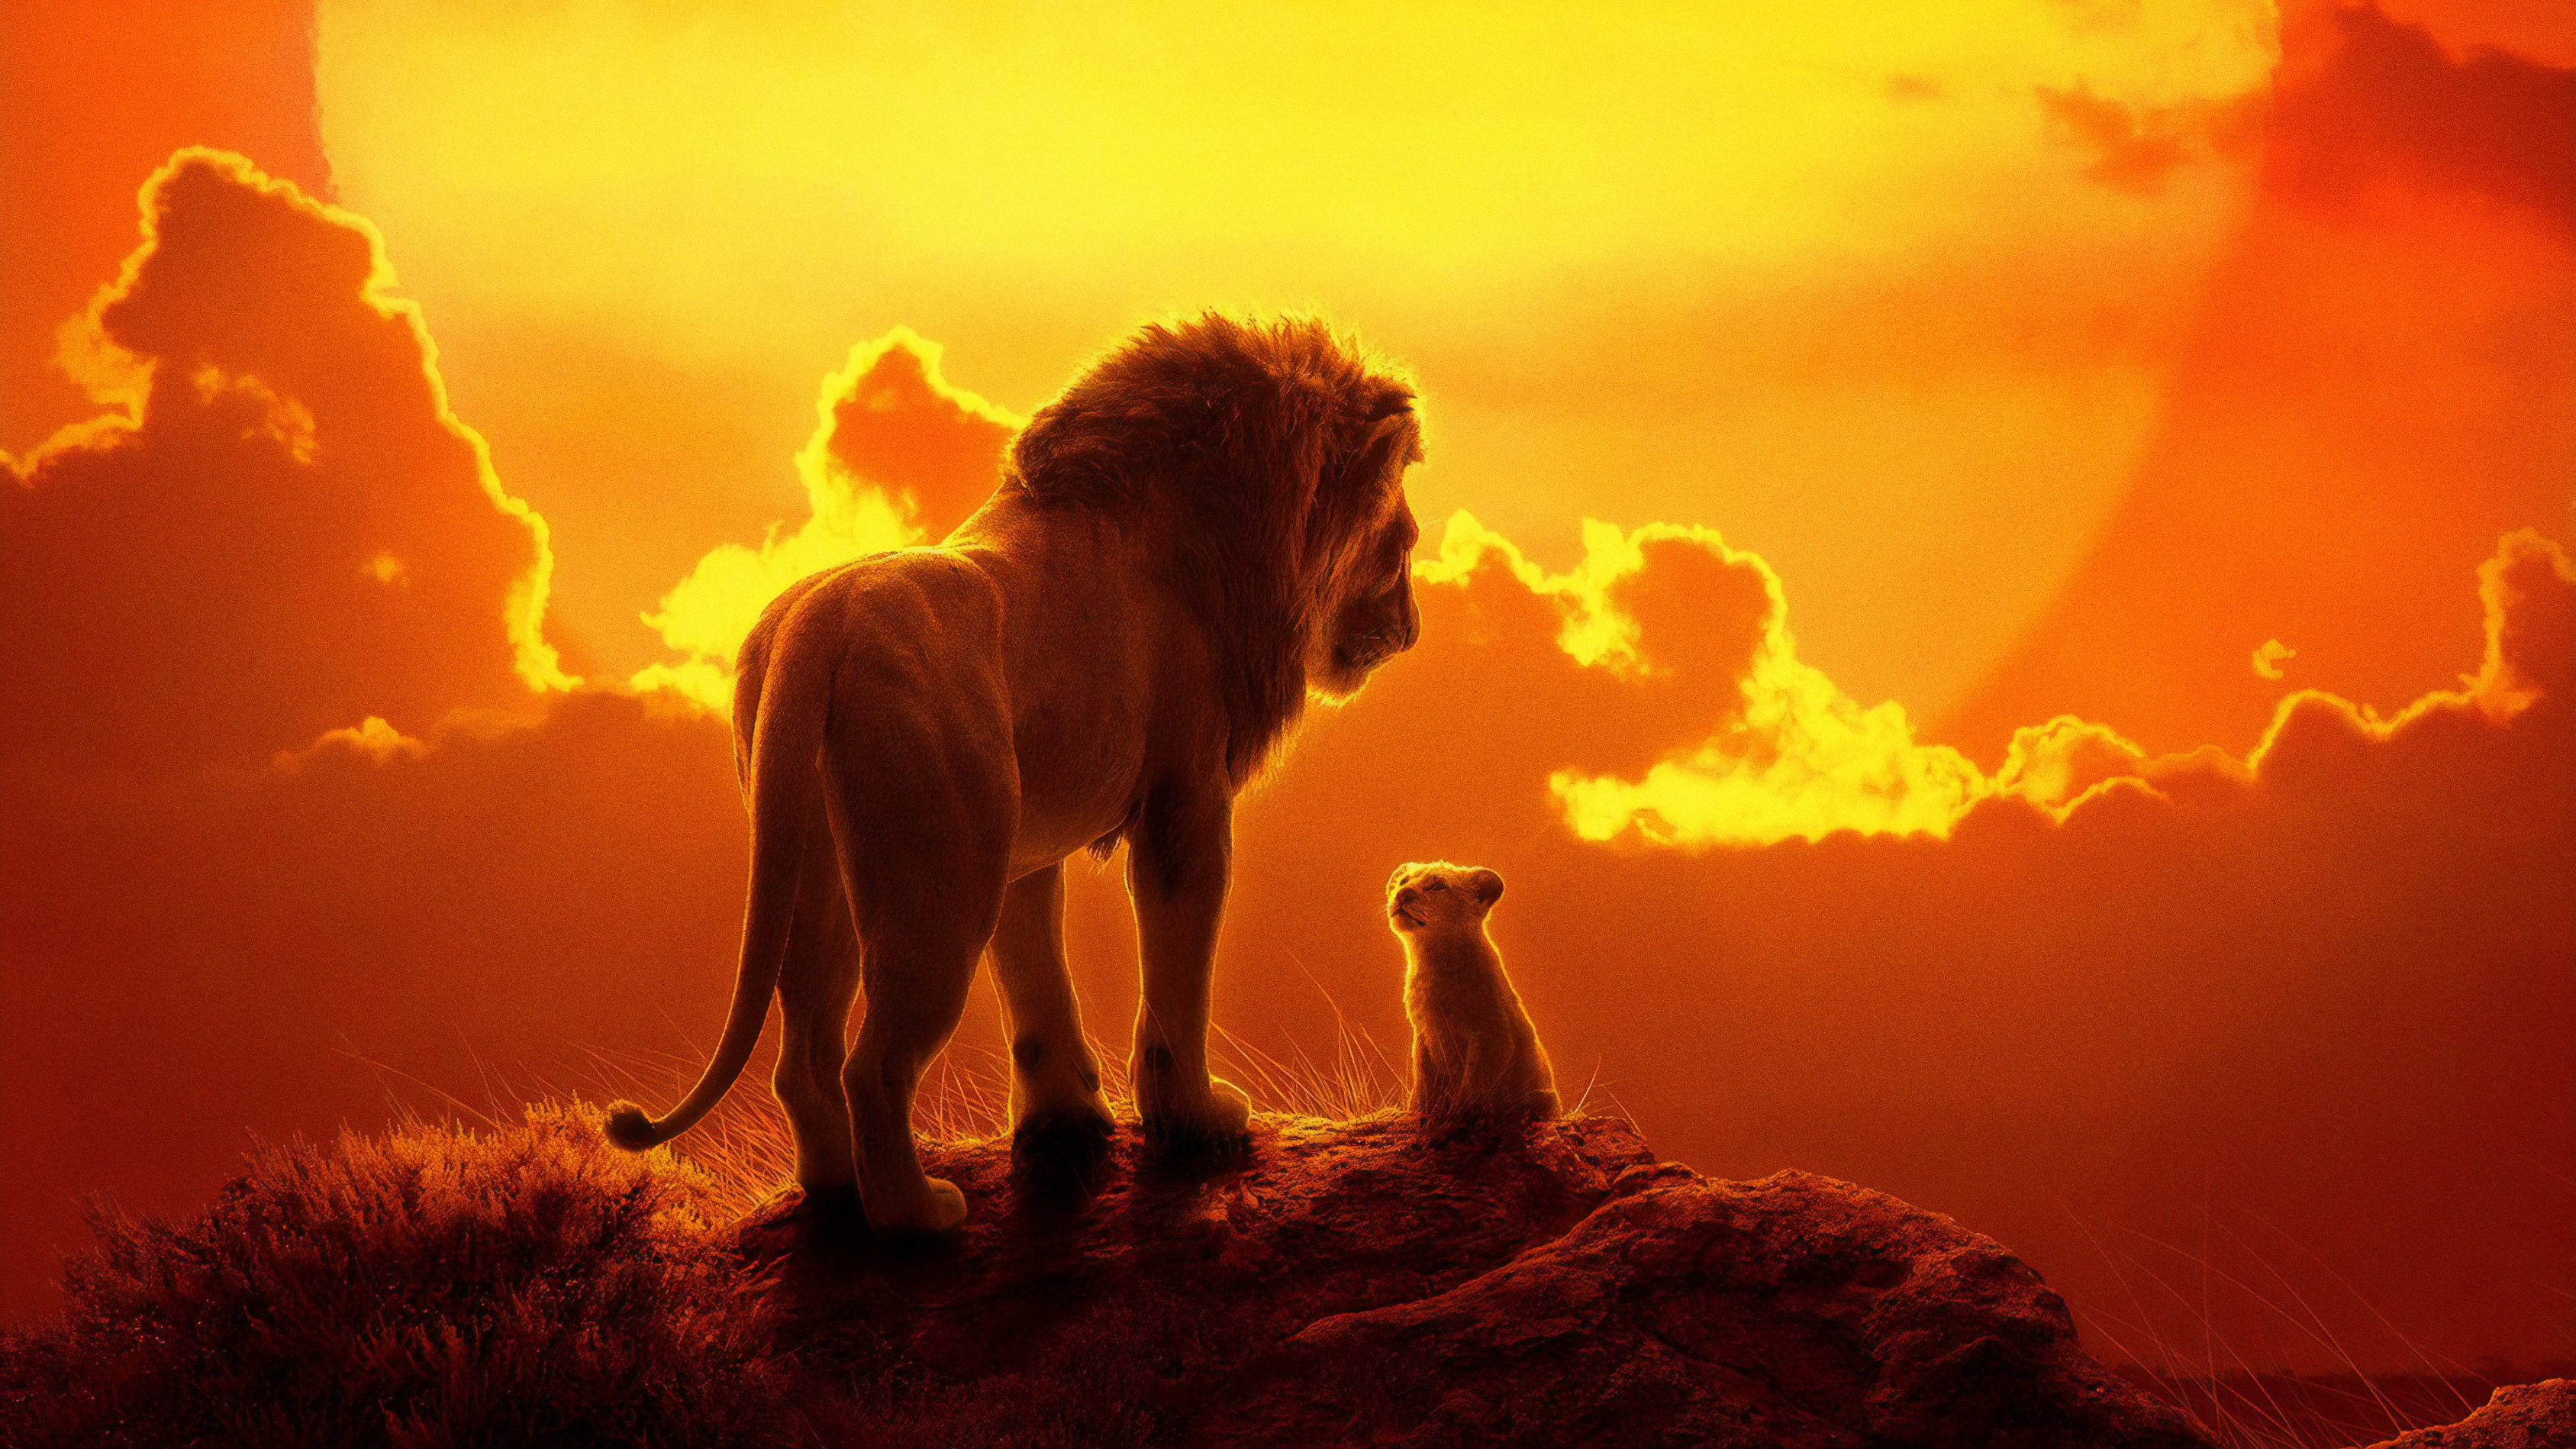 Mufasa The Lion King Simba The Lion King 2019 3375x1898